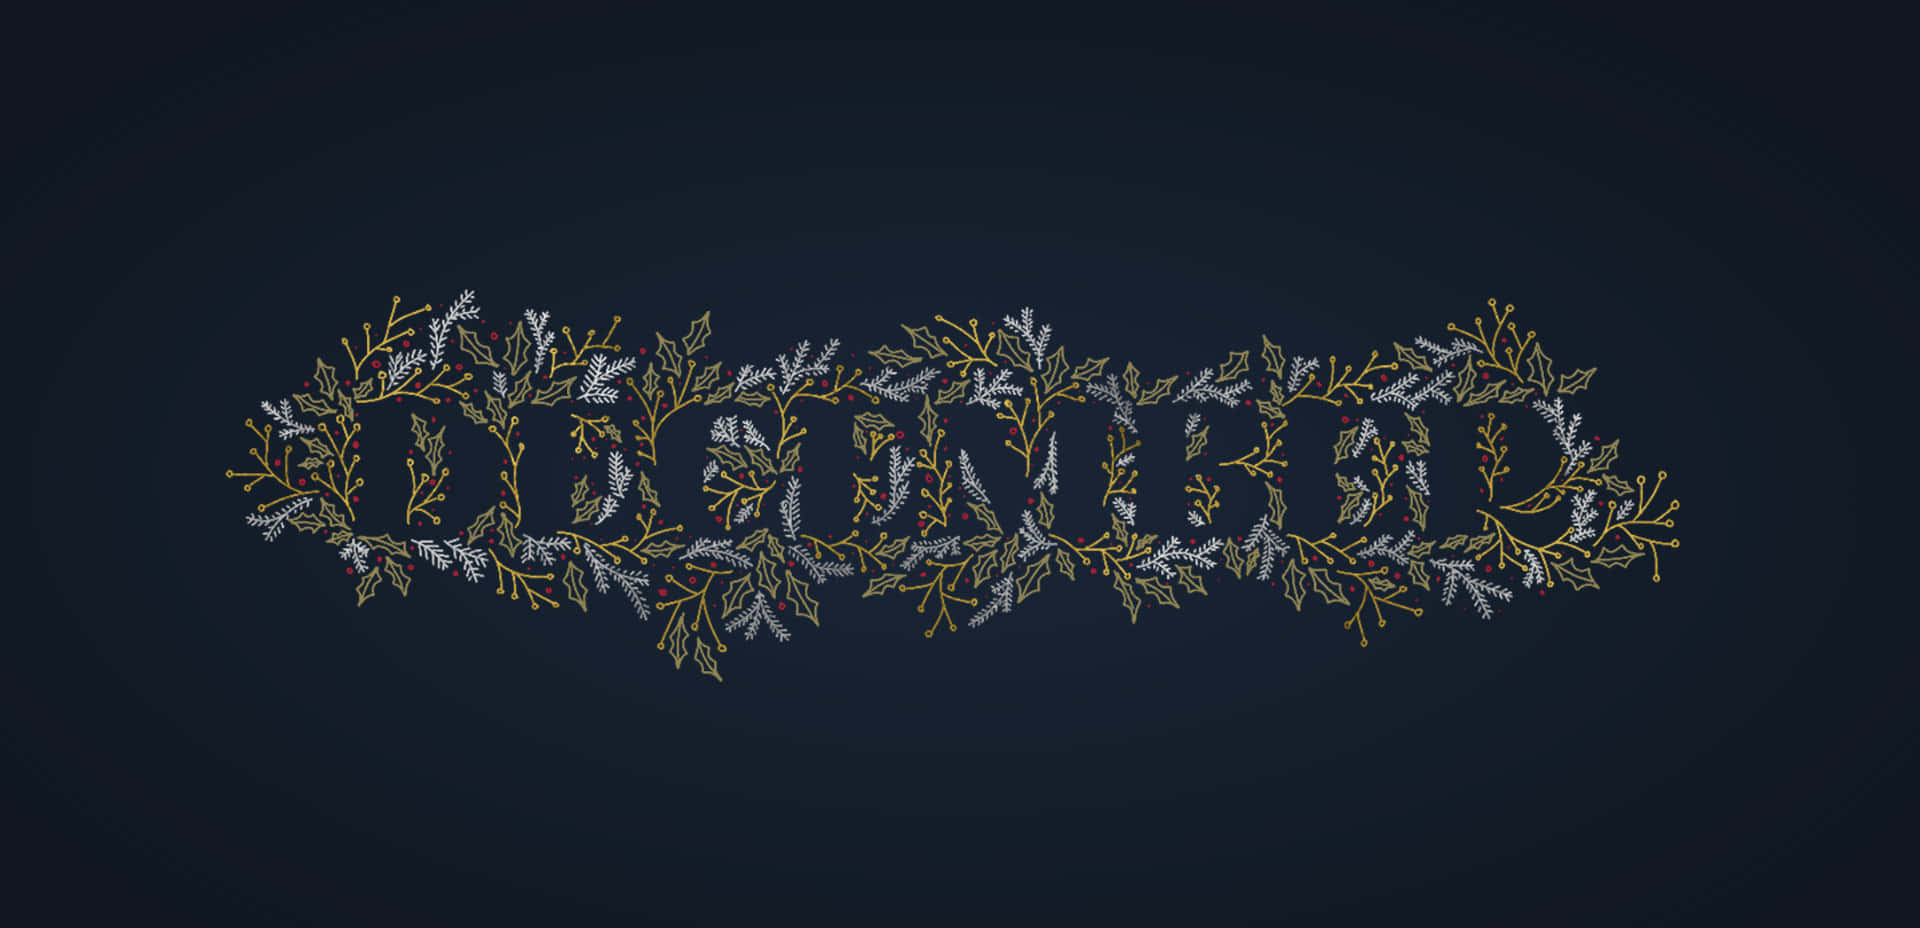 Get festive this December